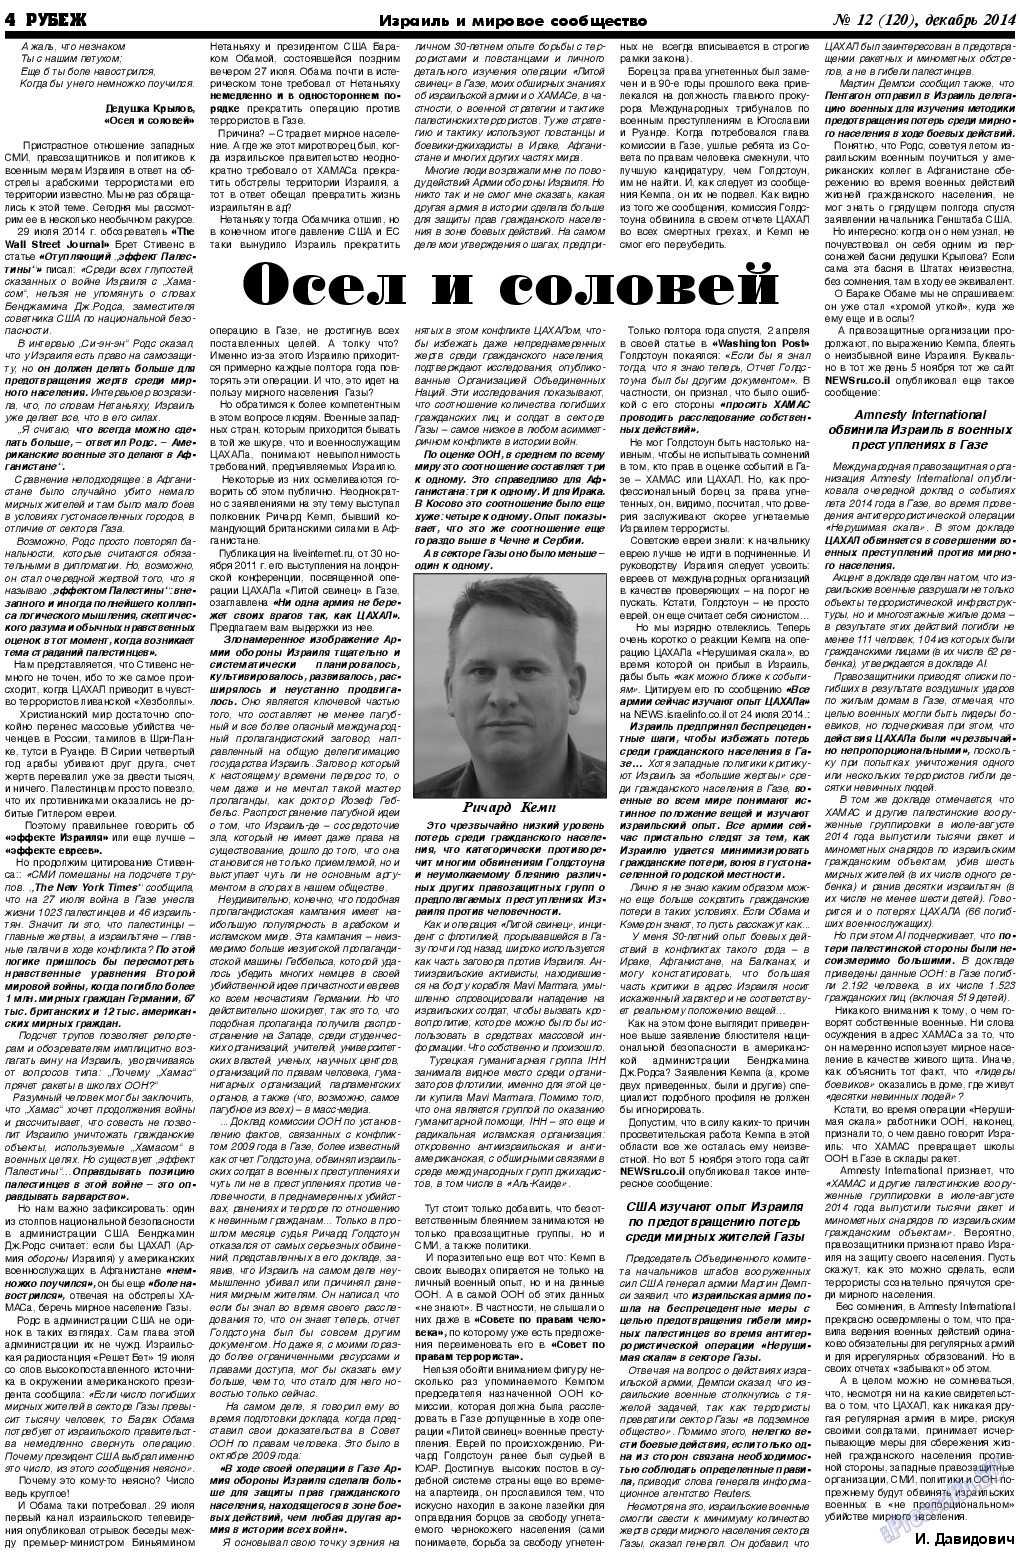 Рубеж, газета. 2014 №12 стр.4